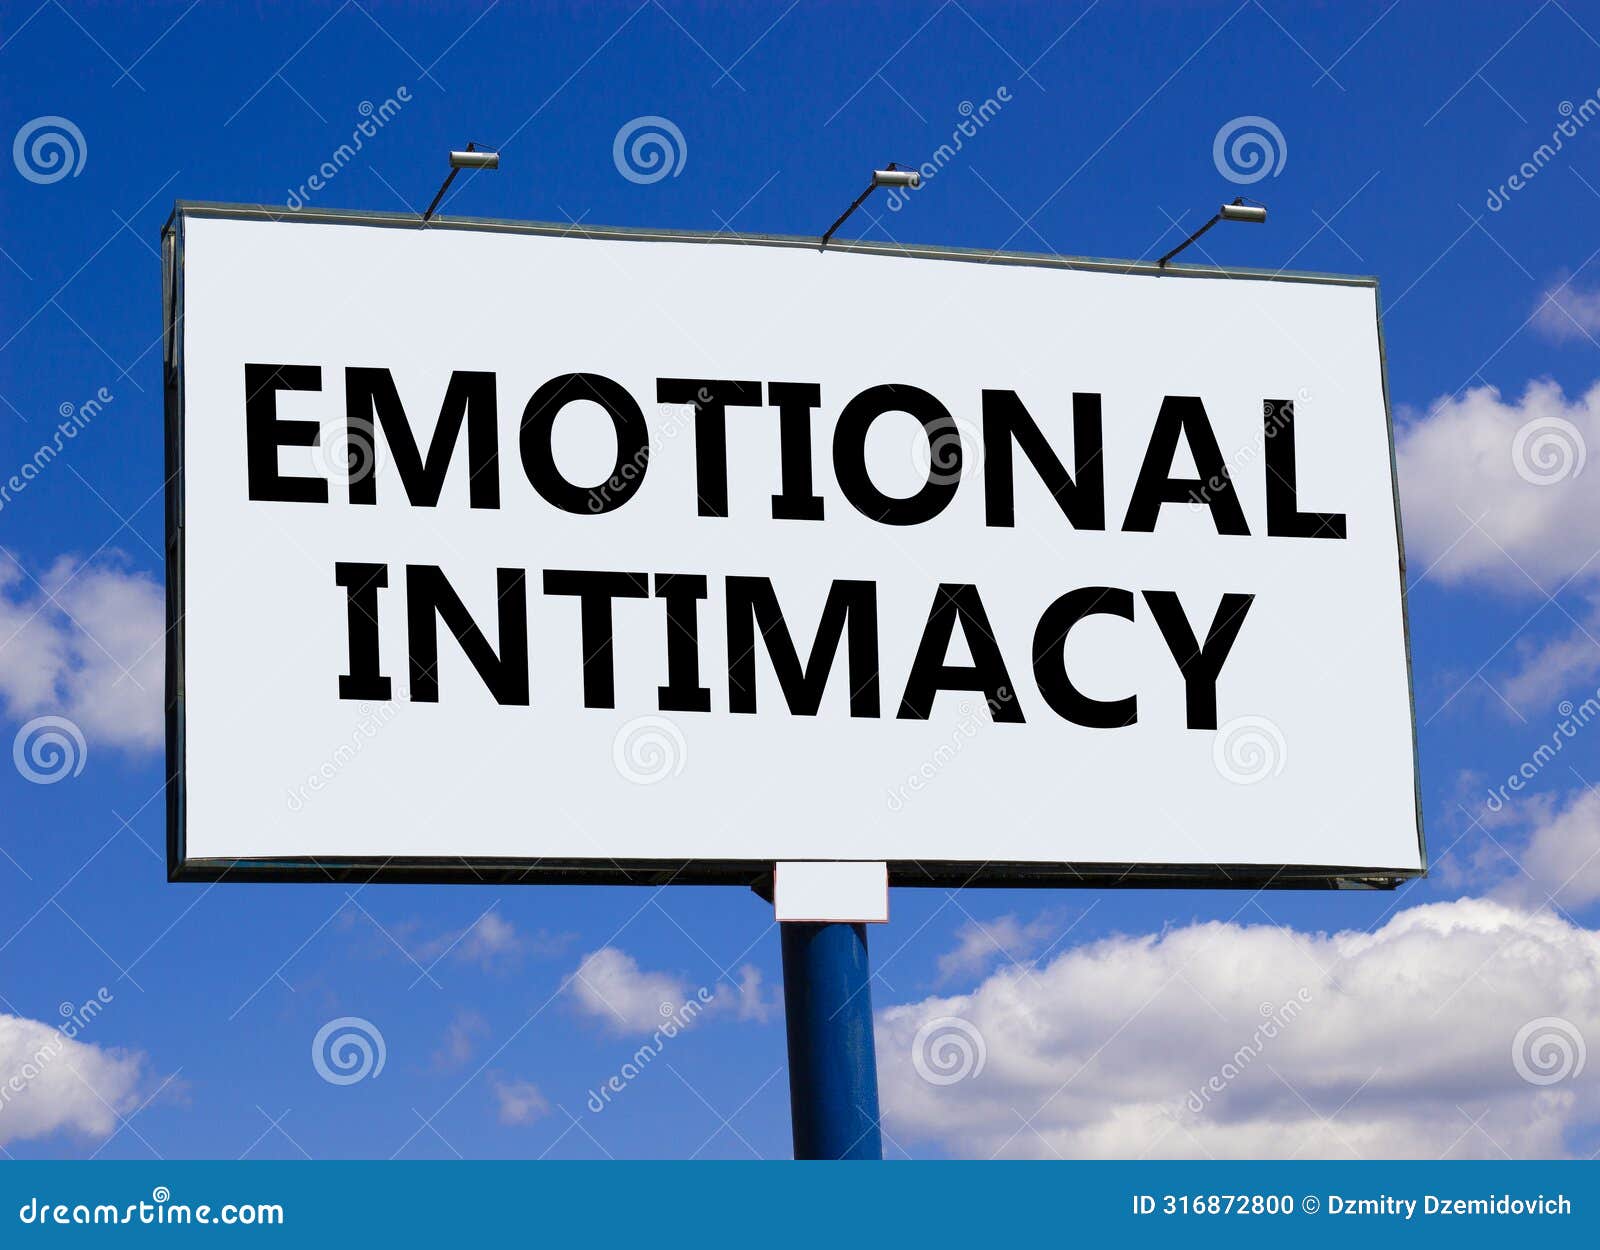 emotional intimacy . concept words emotional intimacy on beautiful white billboard. beautiful blue sky white cloud